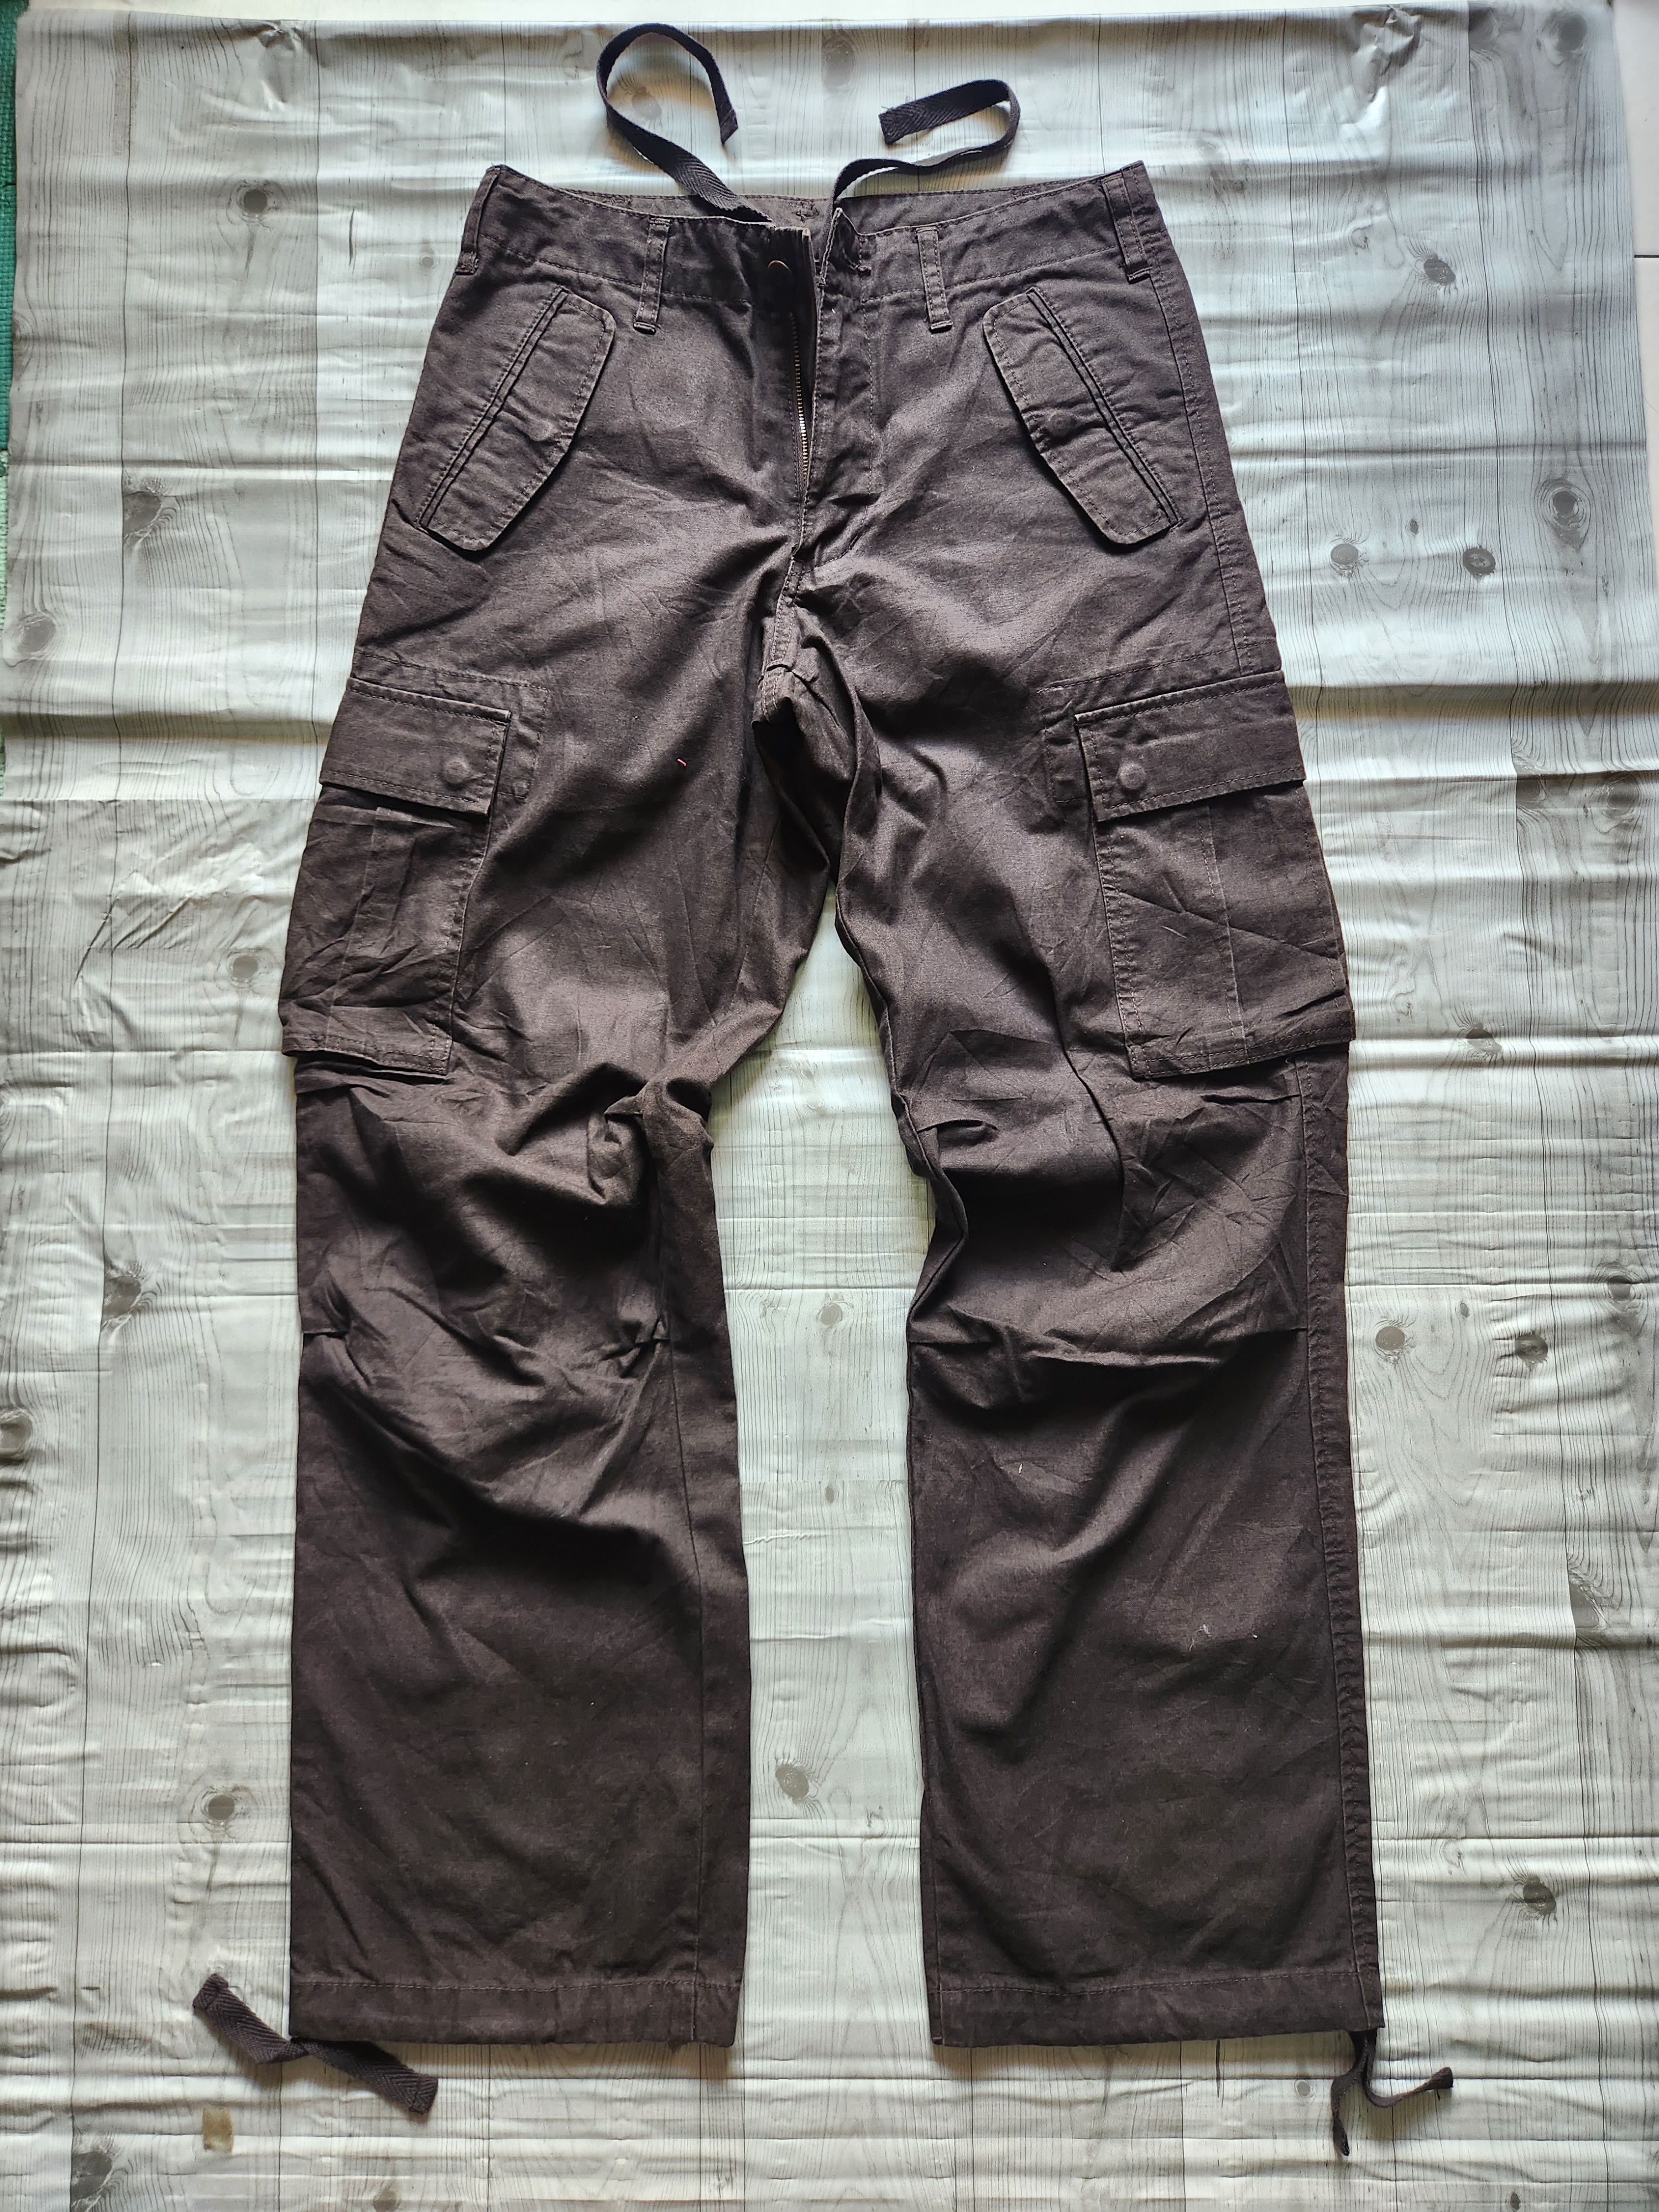 Uniqlo Tactical Pants Cargo Pockets - 3